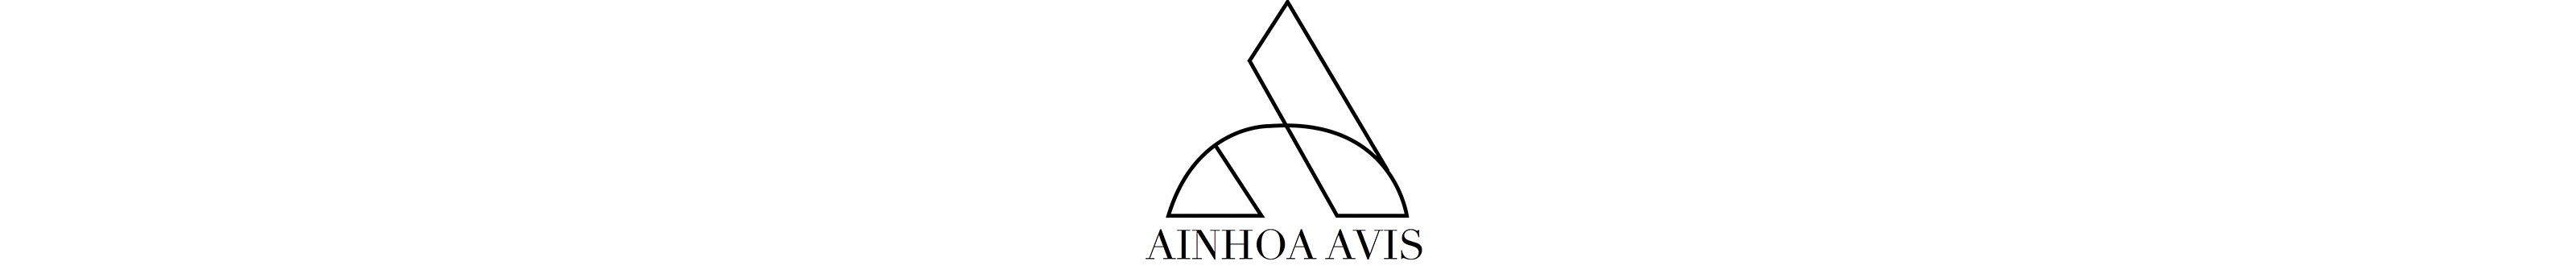 Banner de perfil de Ainhoa Avis